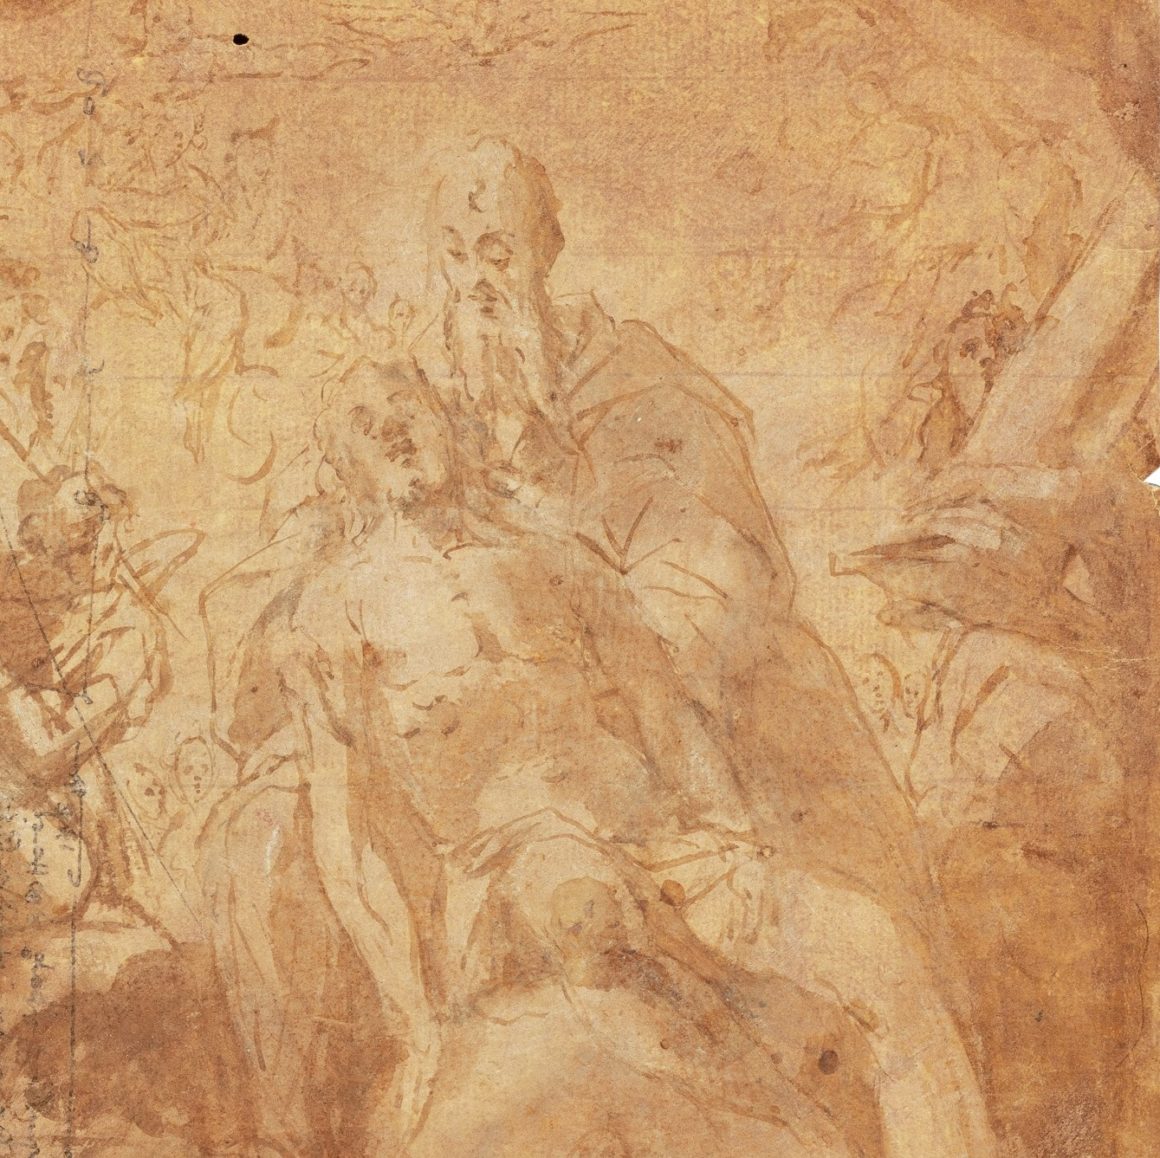 La Hispanic adquiere un dibujo atribuido a El Greco